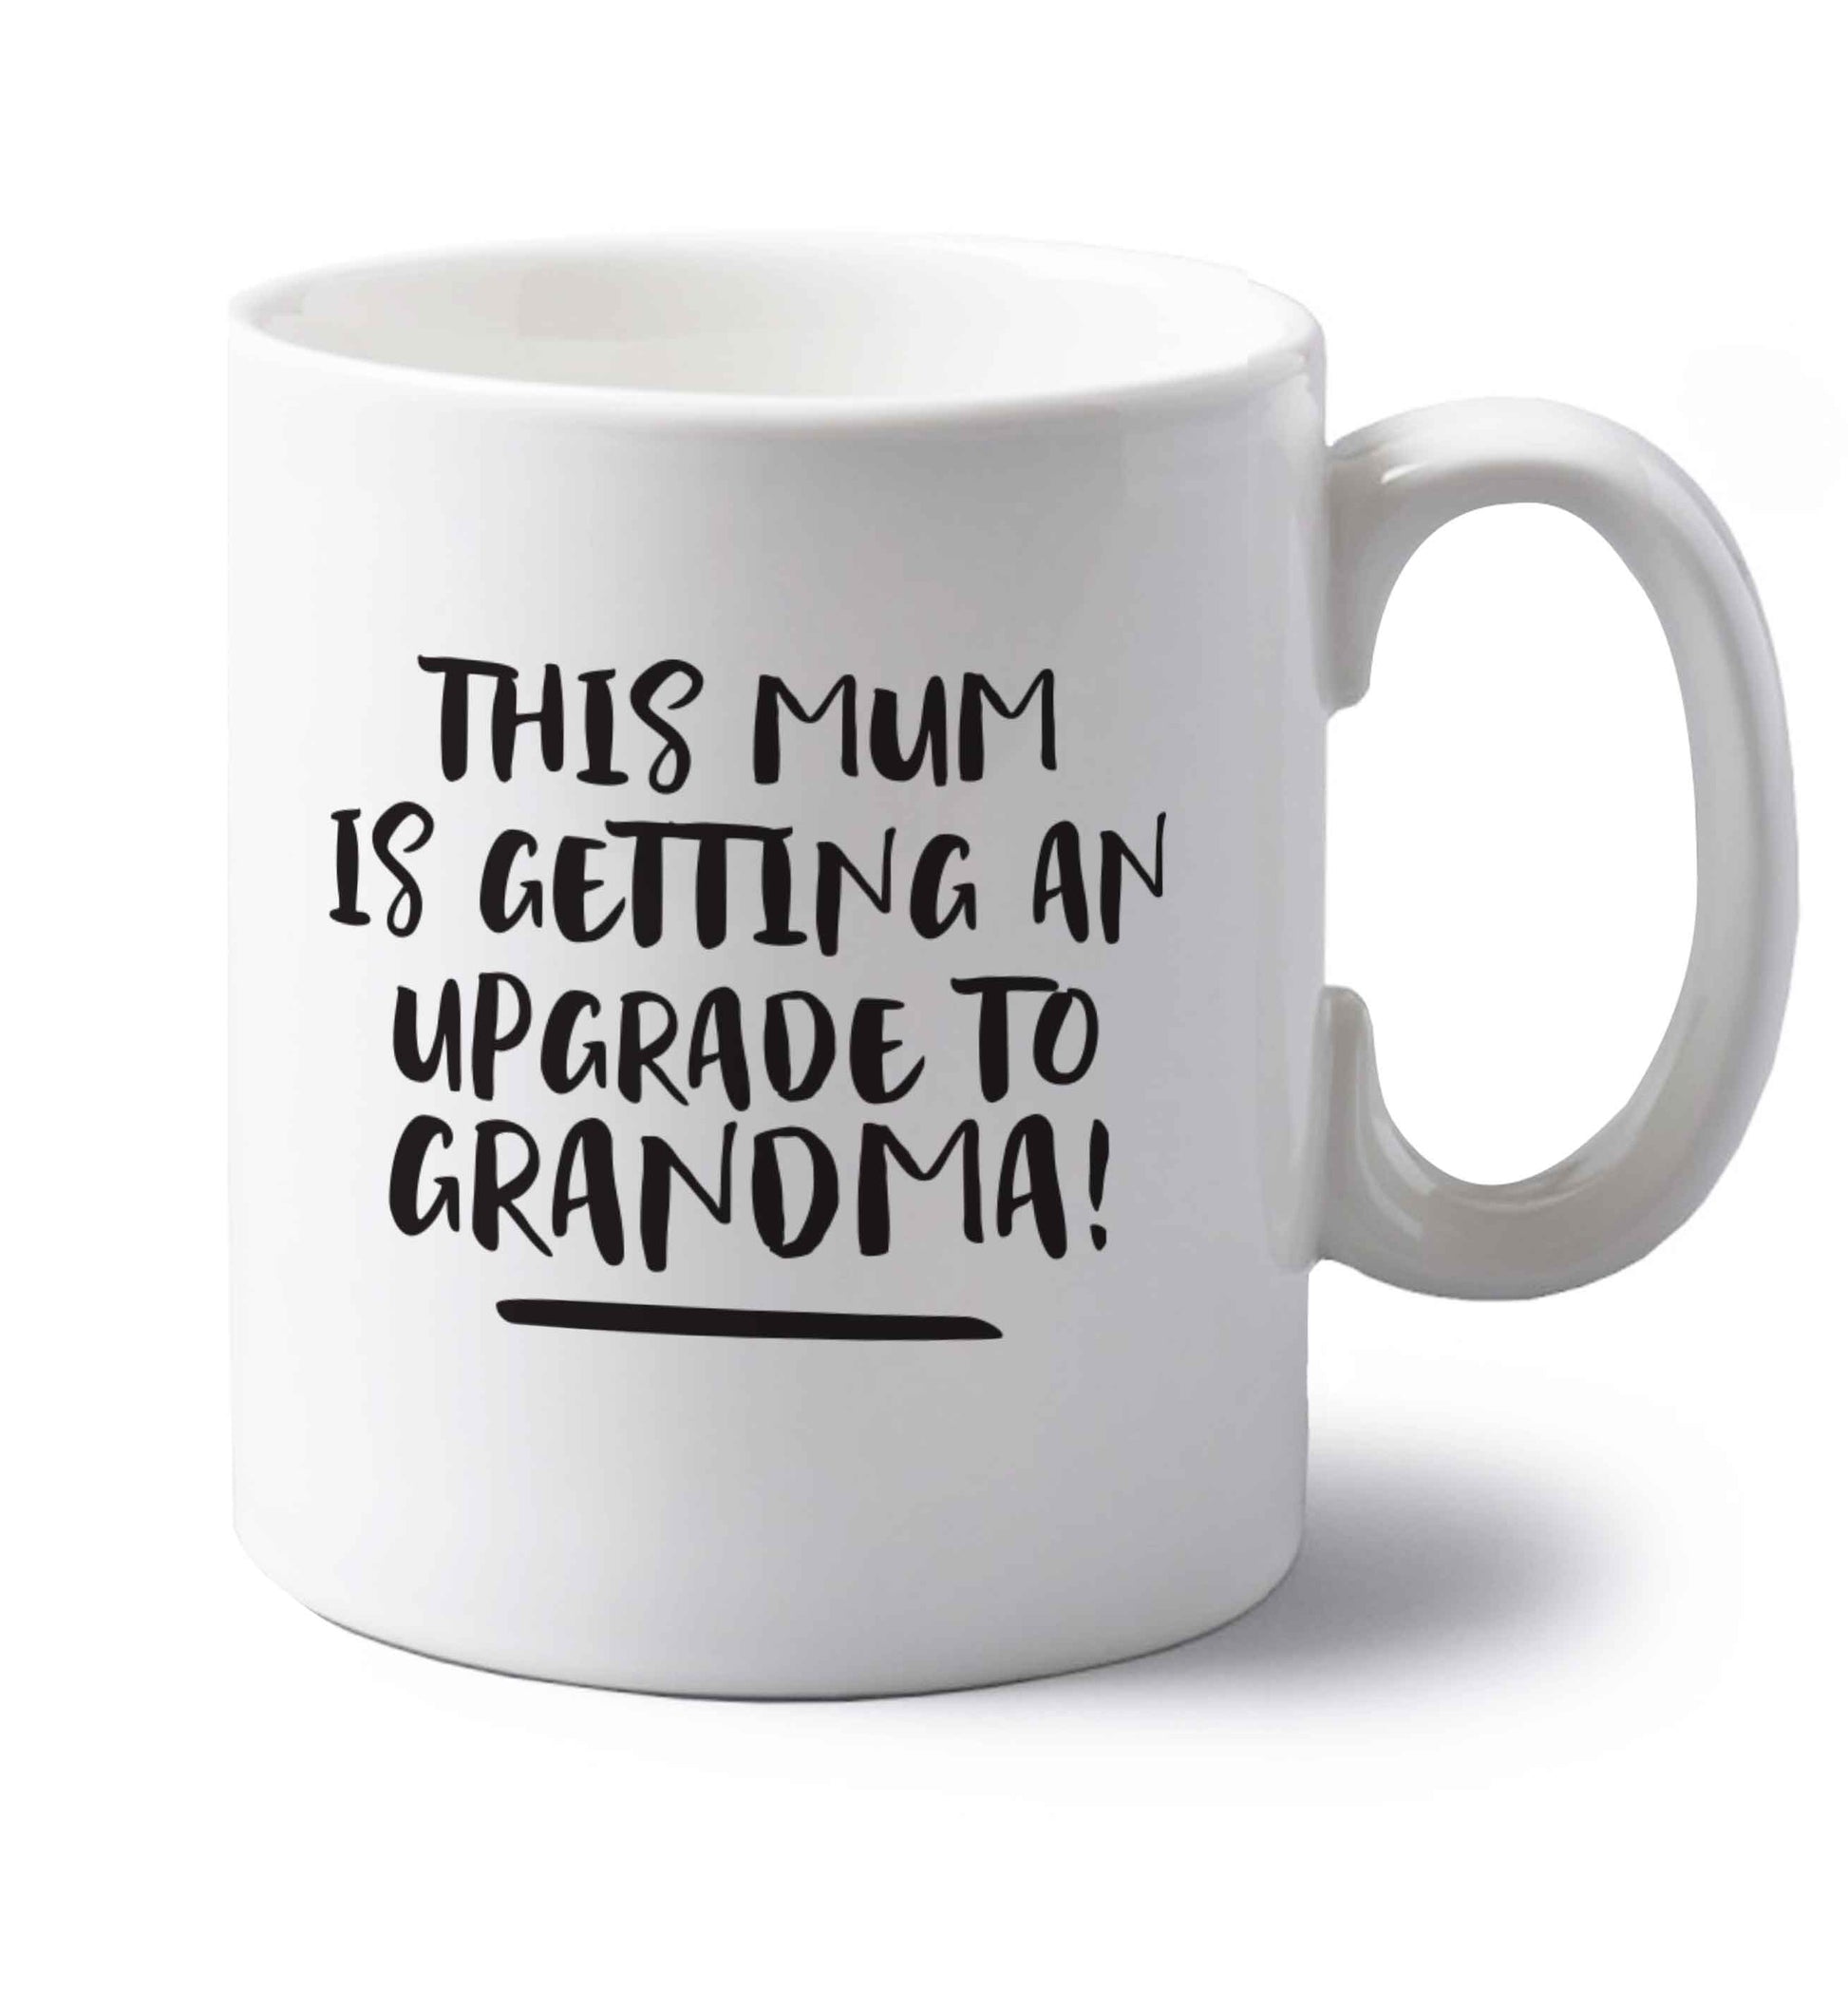 This mum is getting an upgrade to grandma! left handed white ceramic mug 